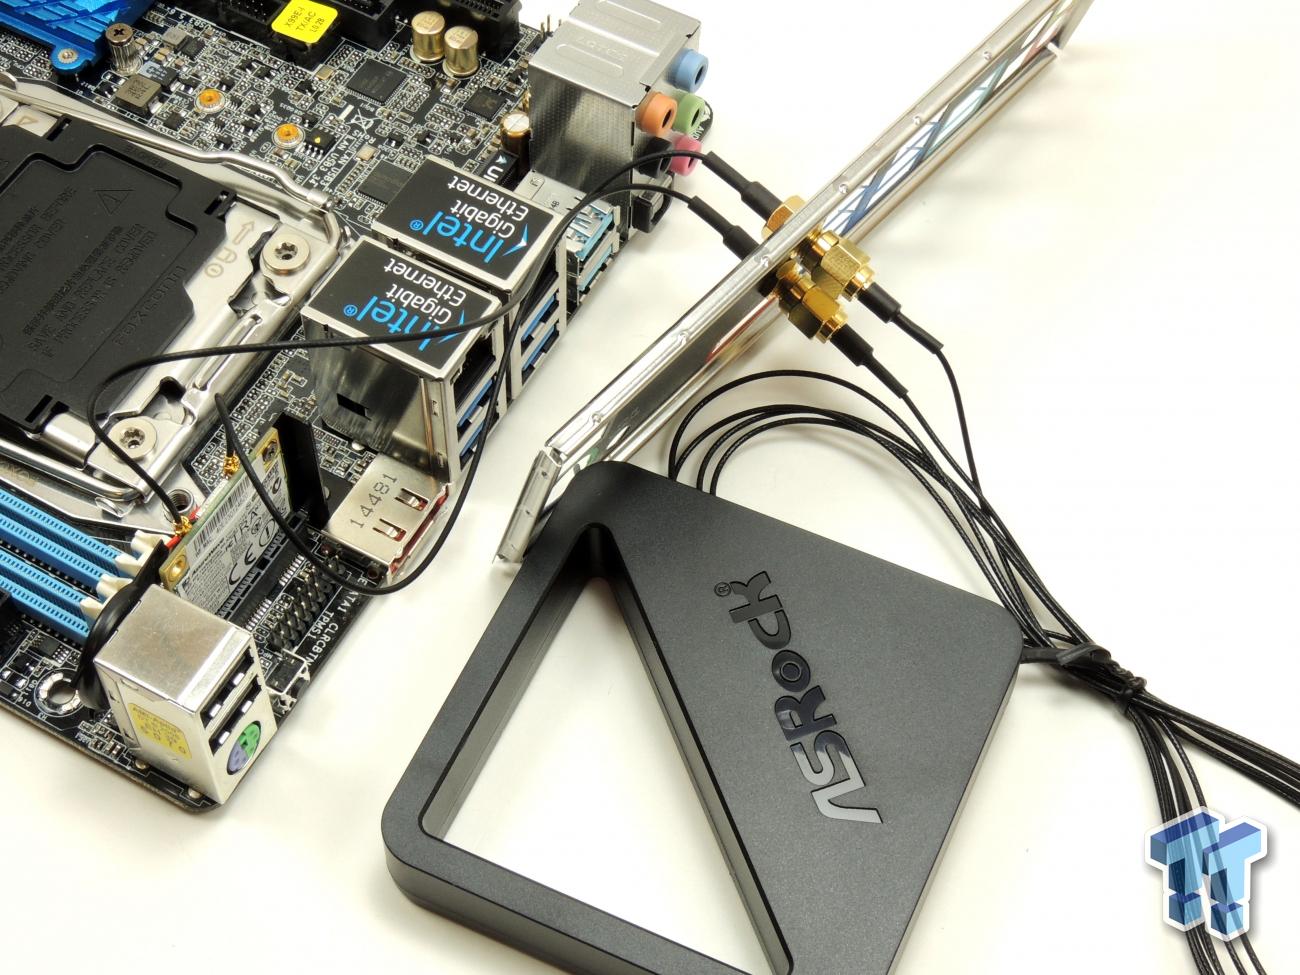 Officer Selskab konservativ ASRock X99E-ITX/ac Mini-ITX (Intel X99) Motherboard Review